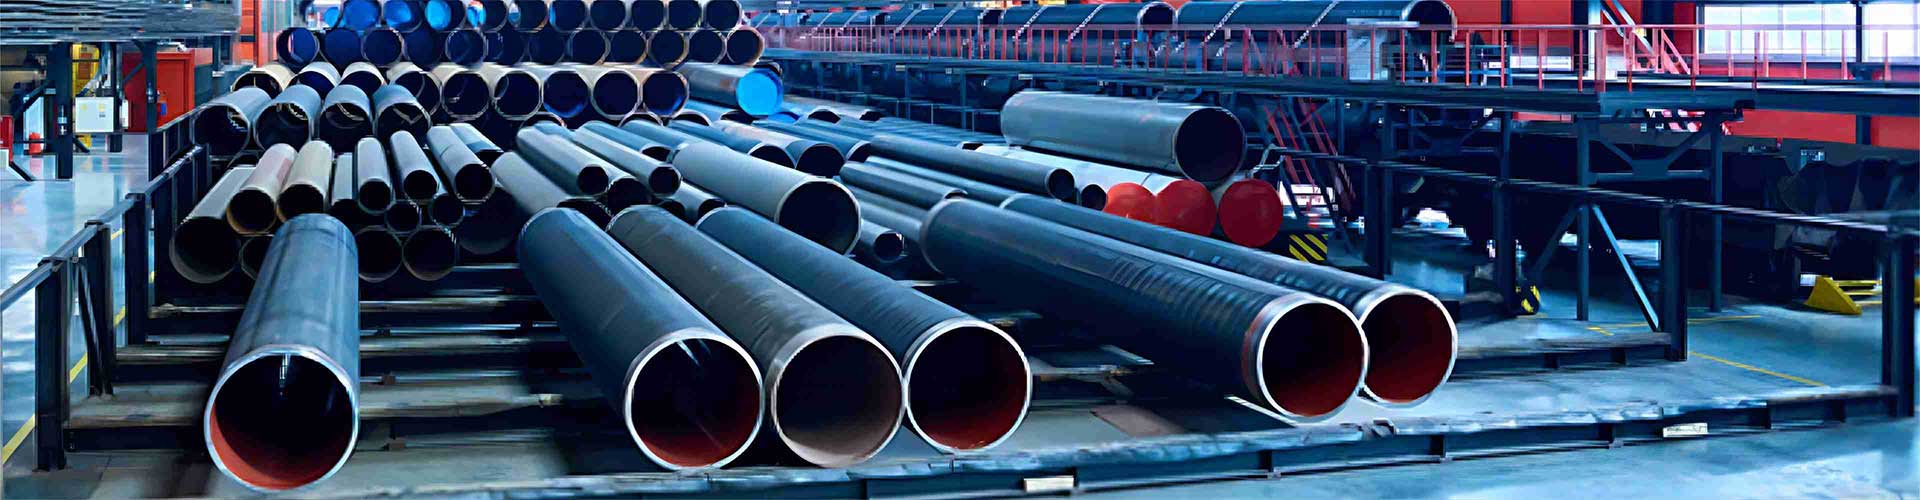 Welded steel pipe supplier,Sprial steel pipe,Seamless steel pipe manufacturer